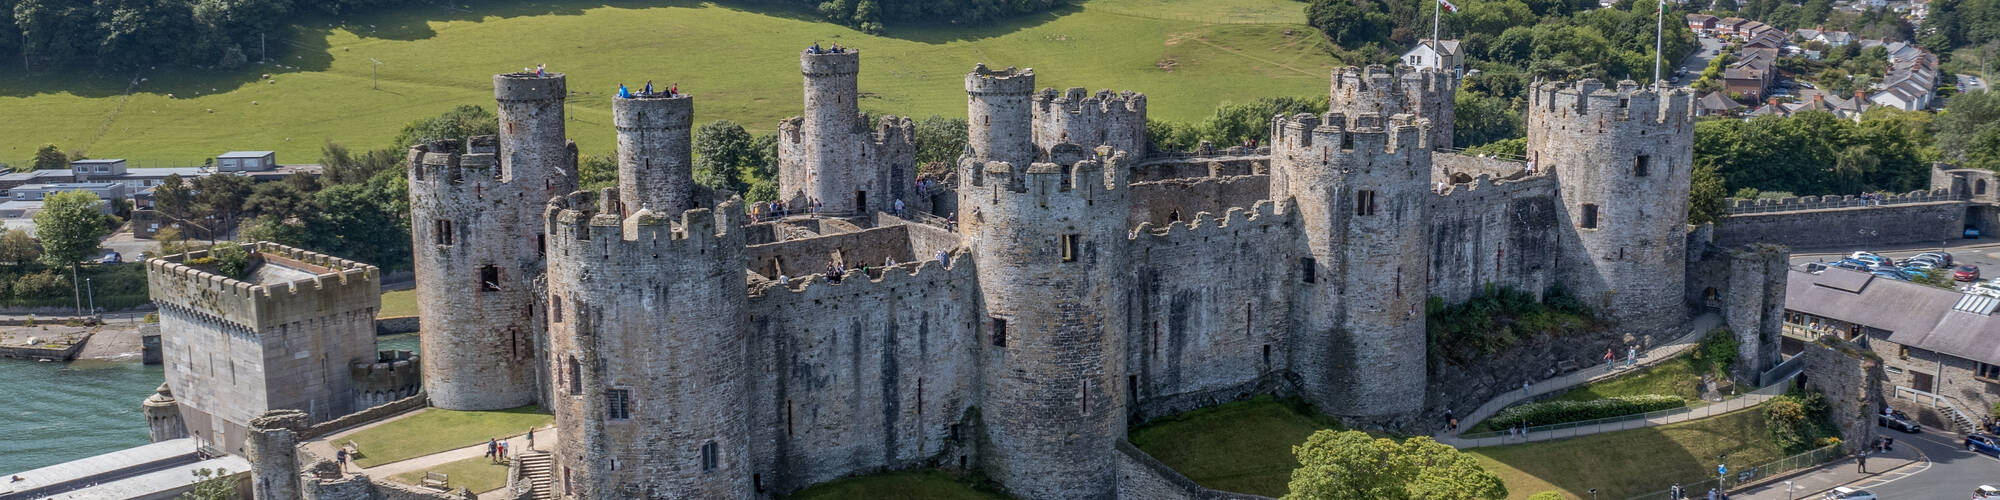 Conwy Castle Drone